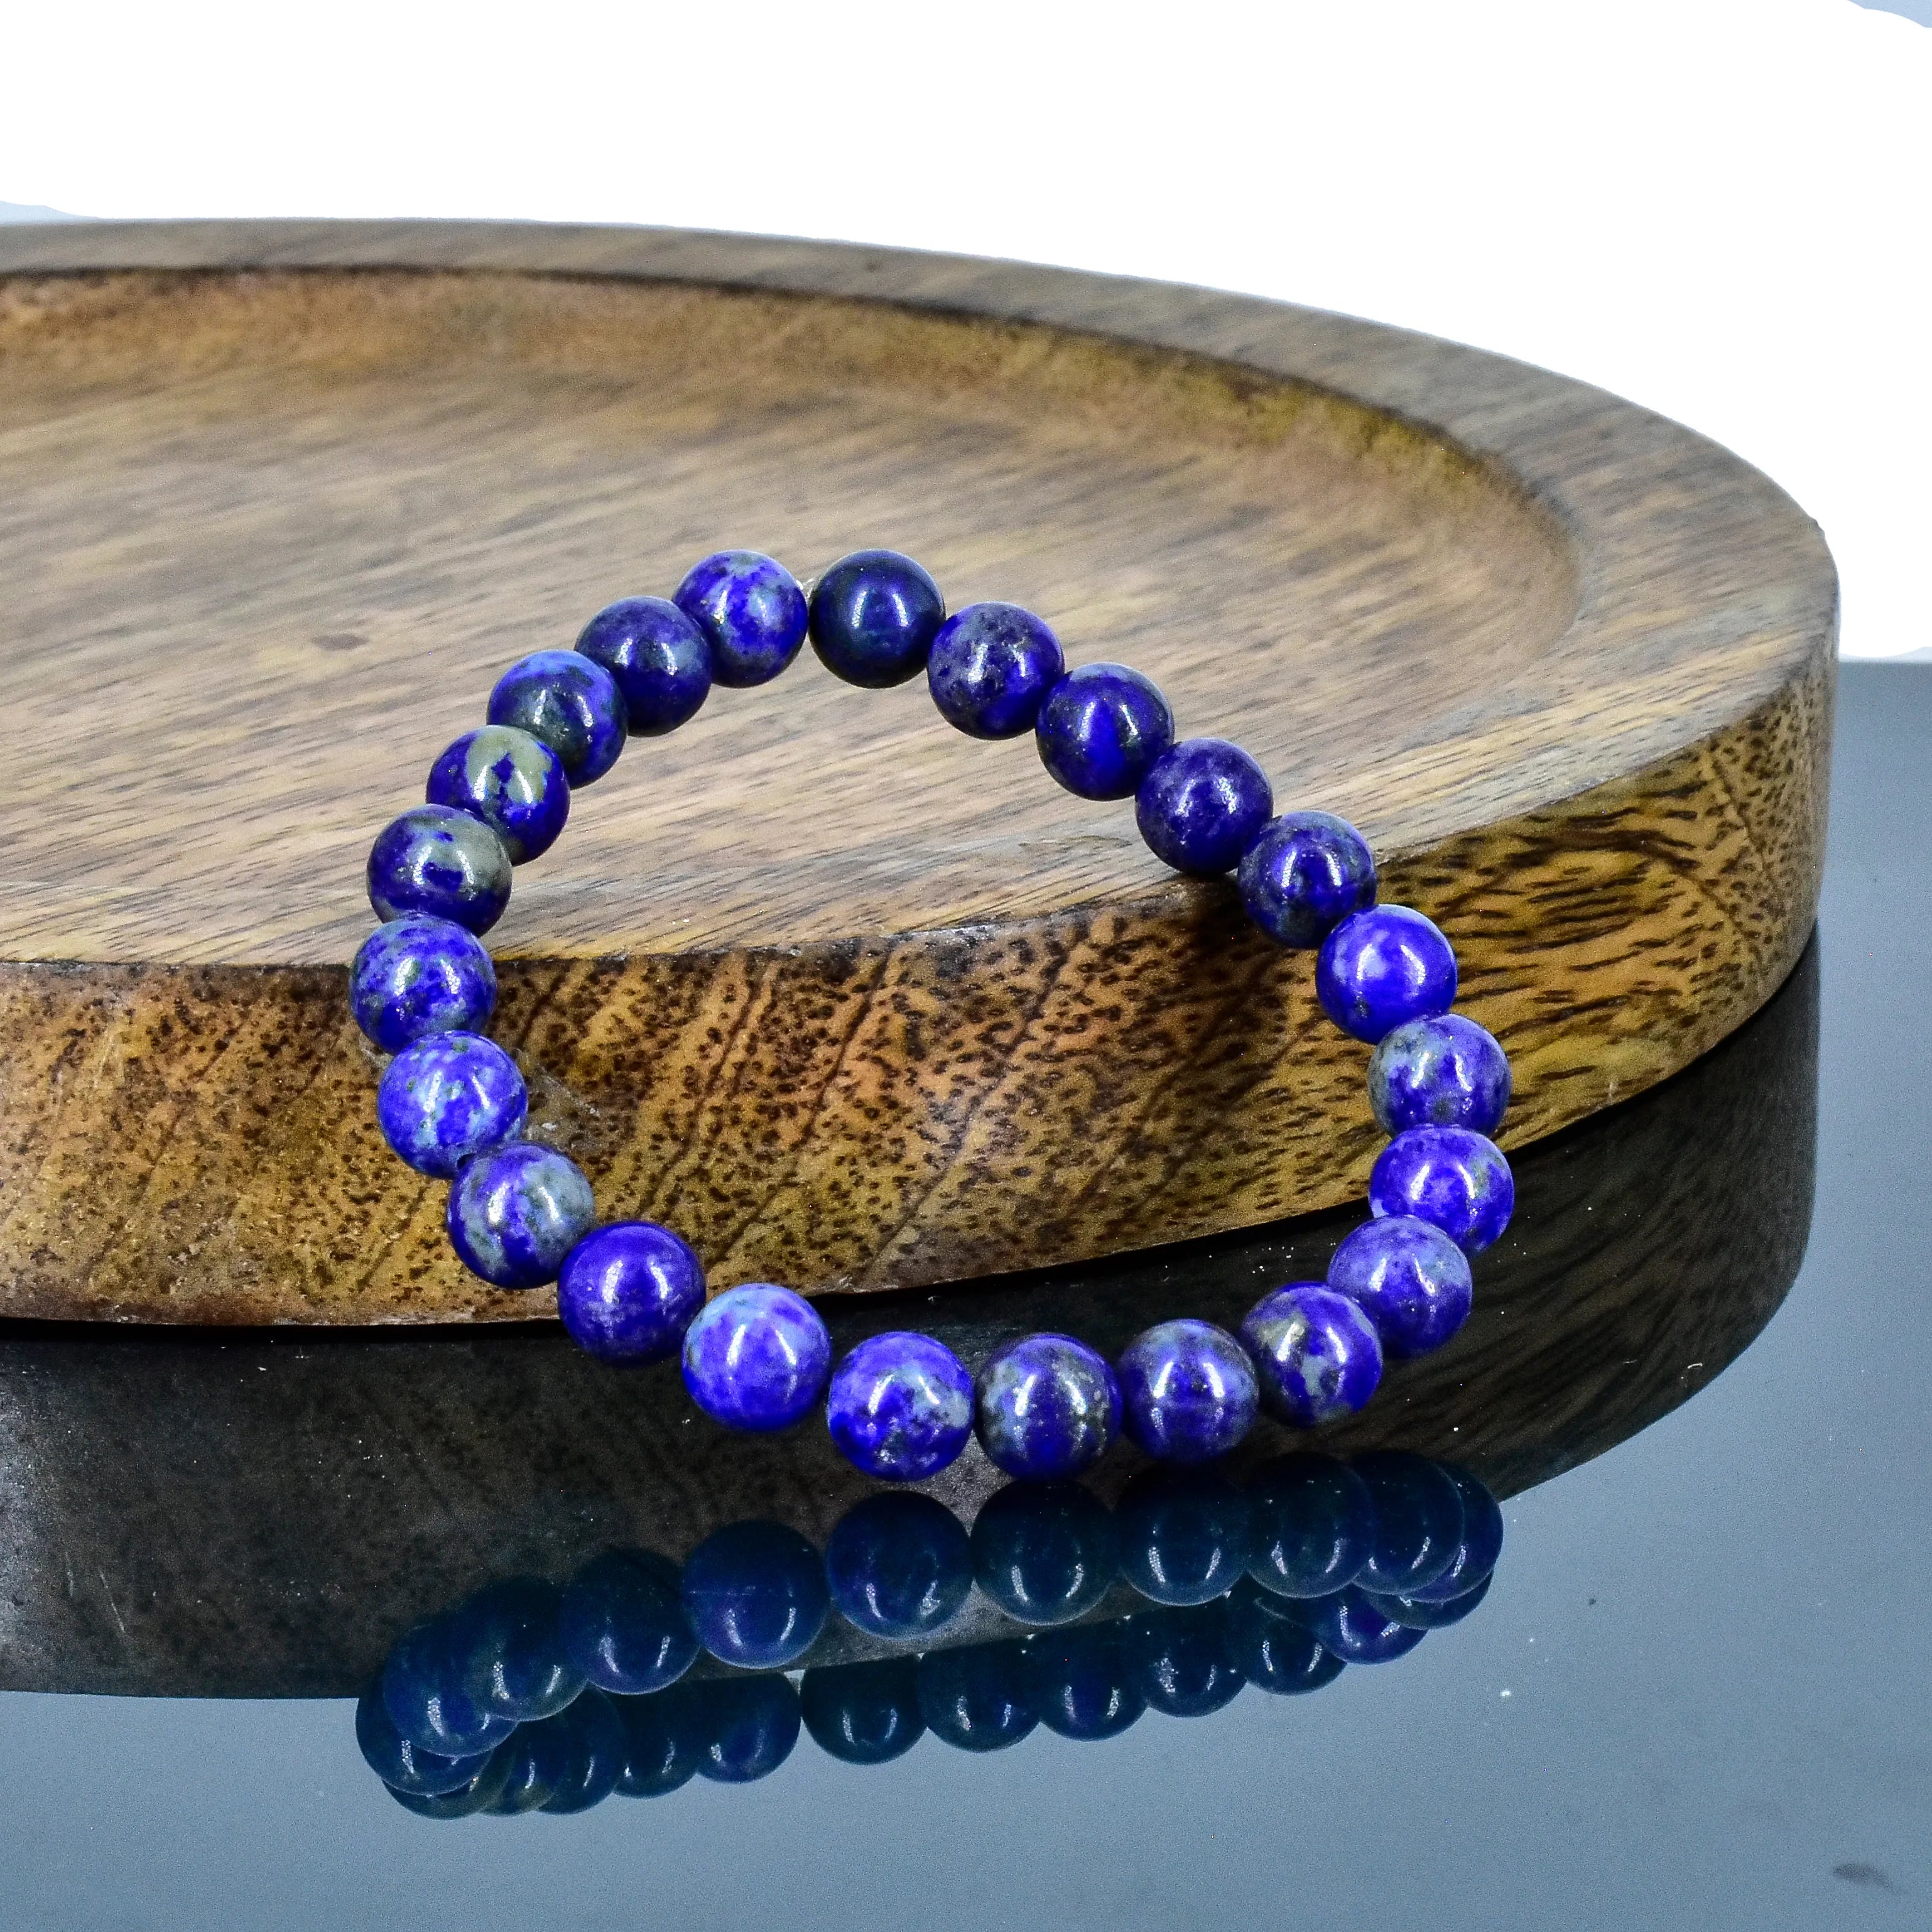 Buy Reiki Crystal Products Lapis Lazuli Bracelet Diamond Cut 6 mm Round  Bead Reiki Healing Crystal - Stone Chakra Bracelet for Unisex (Color :  Blue) at Amazon.in